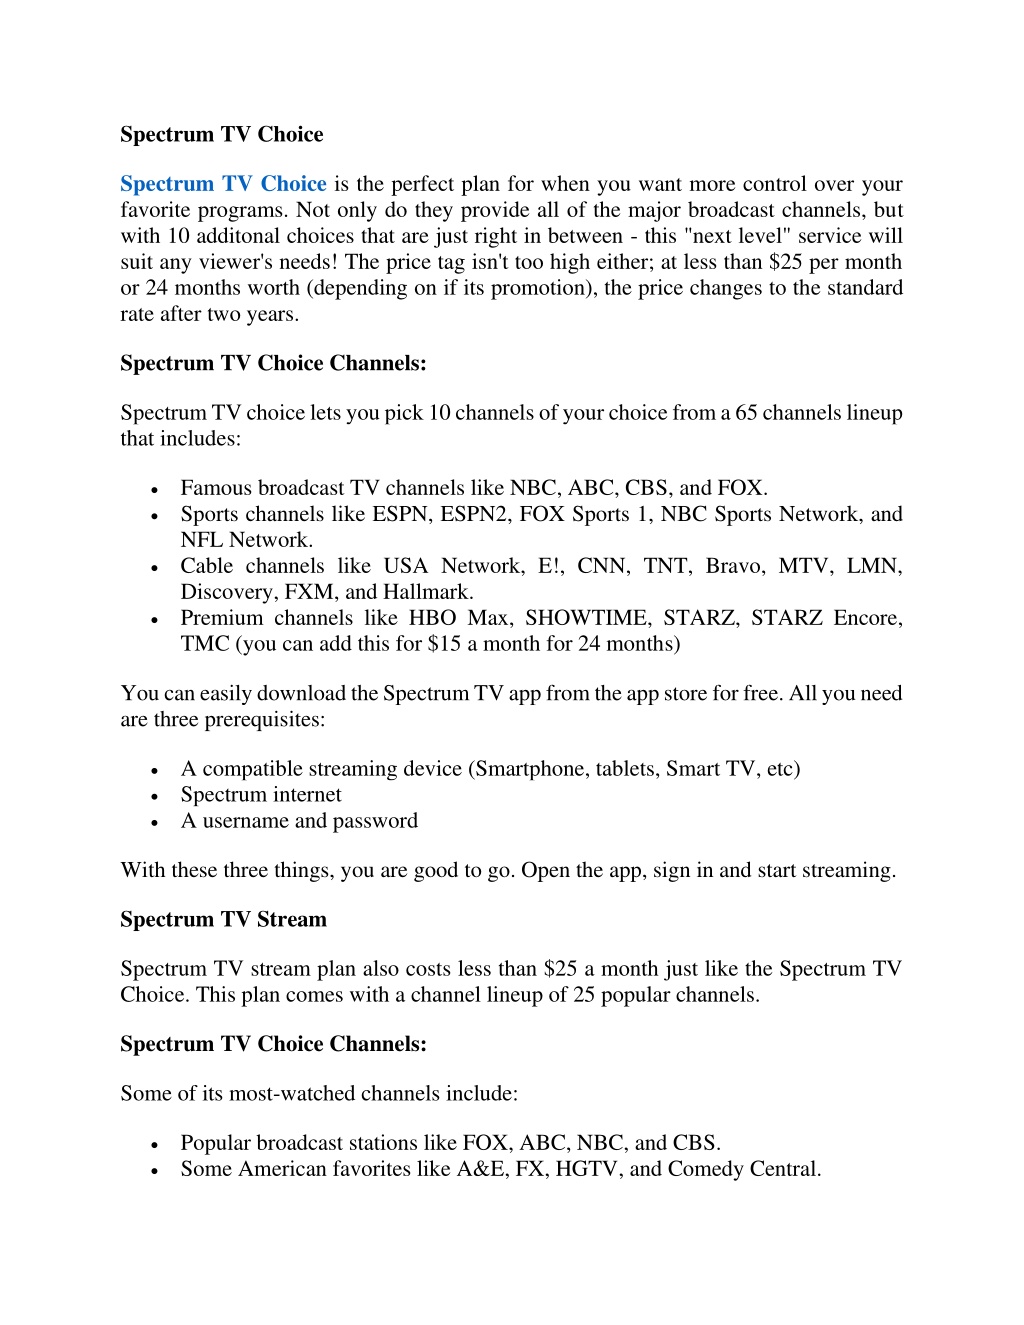 spectrum tv choice stream channels list